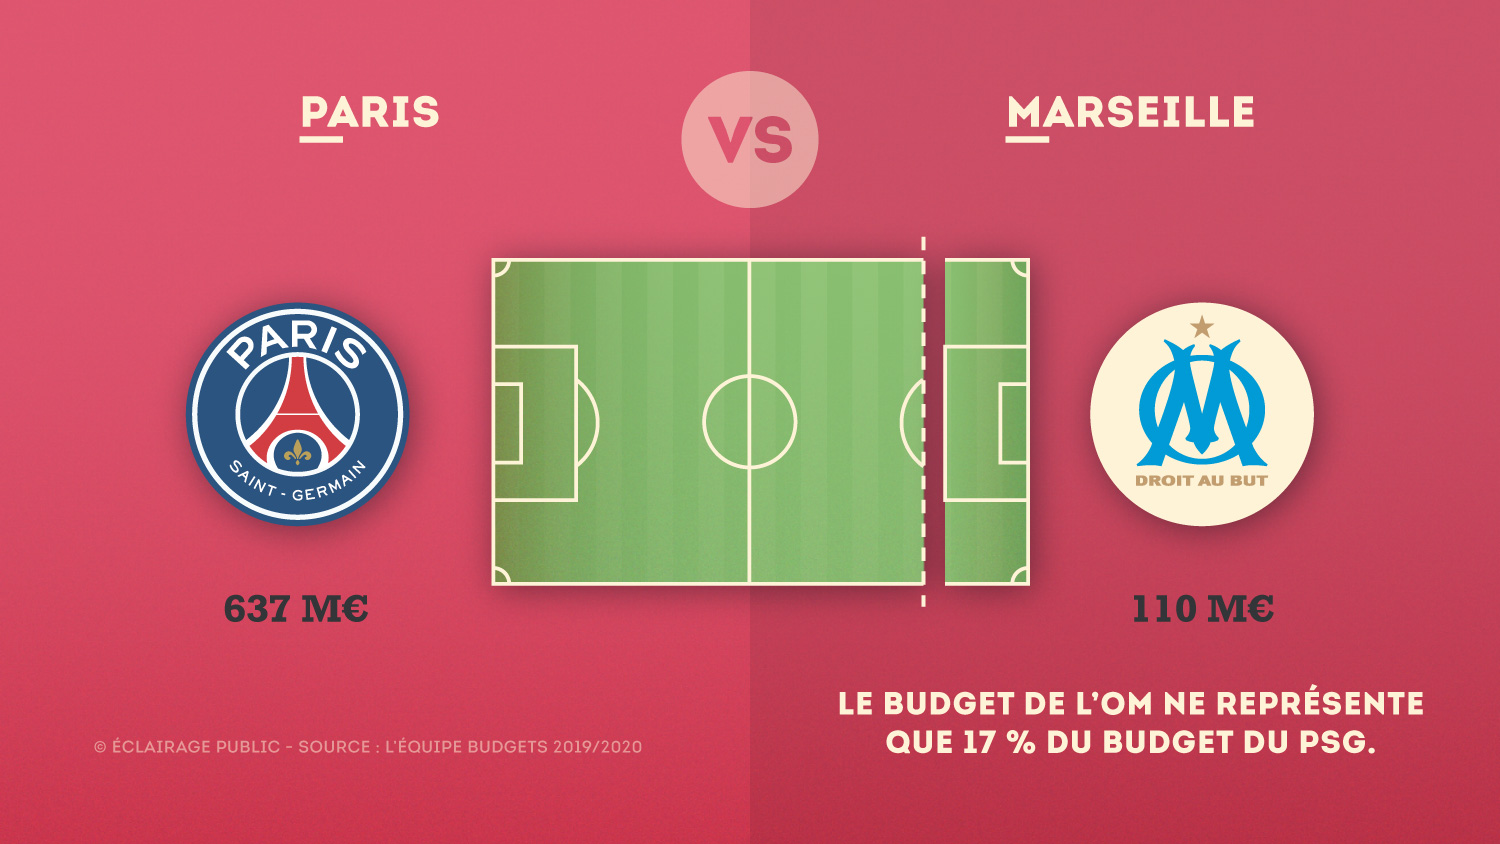 Paris-VS-Marseille-Budget-Club-Football-PSG-OM-Infographie-ECLAIRAGE-PUBLIC@1500x-80